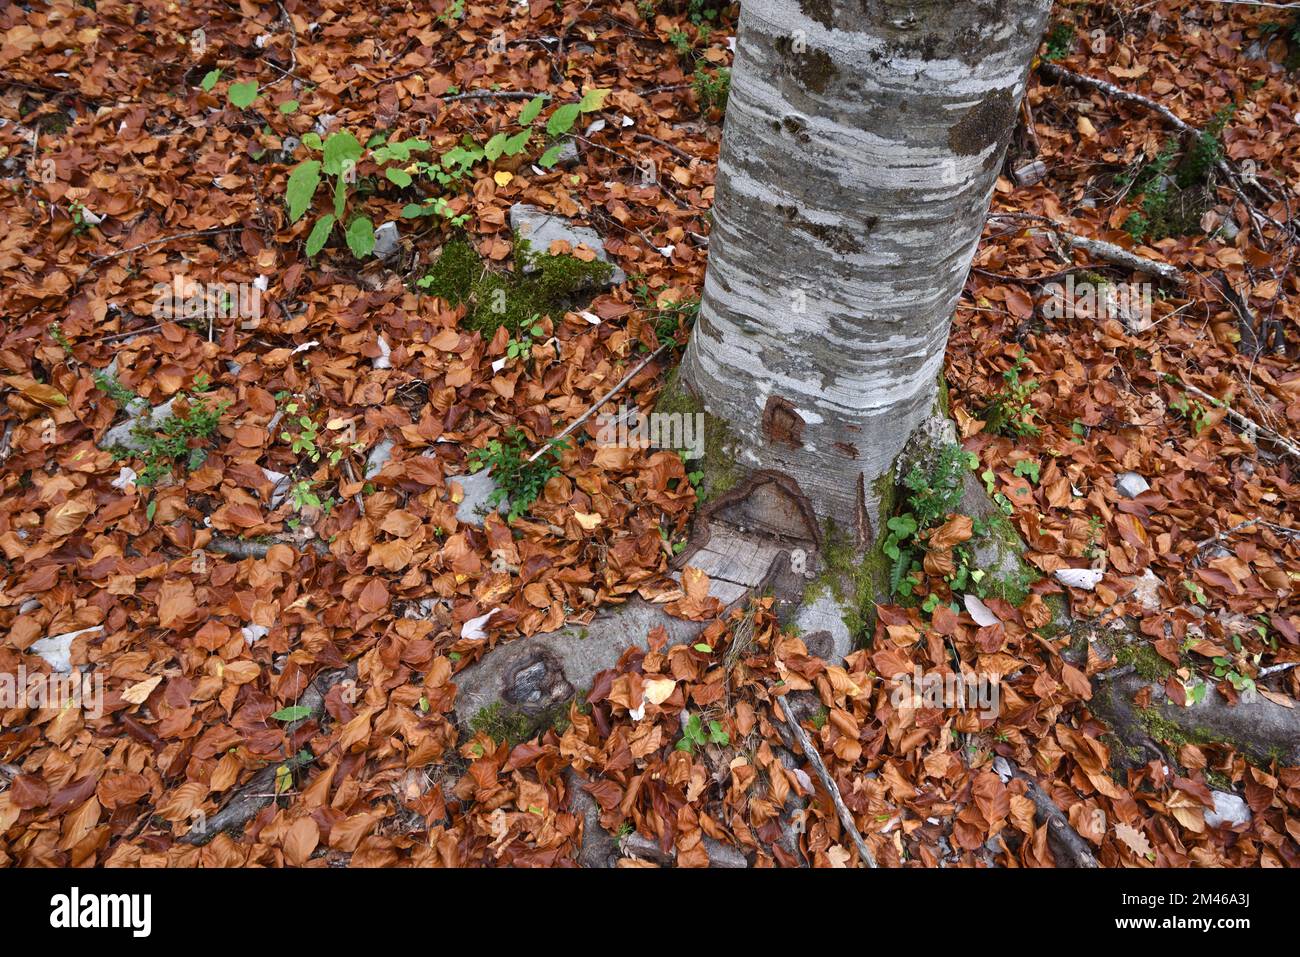 Base of European Beech Tree Trunk and Silver-Coloured Bark, Fagus sylvatica, & Autumn Leaves Stock Photo